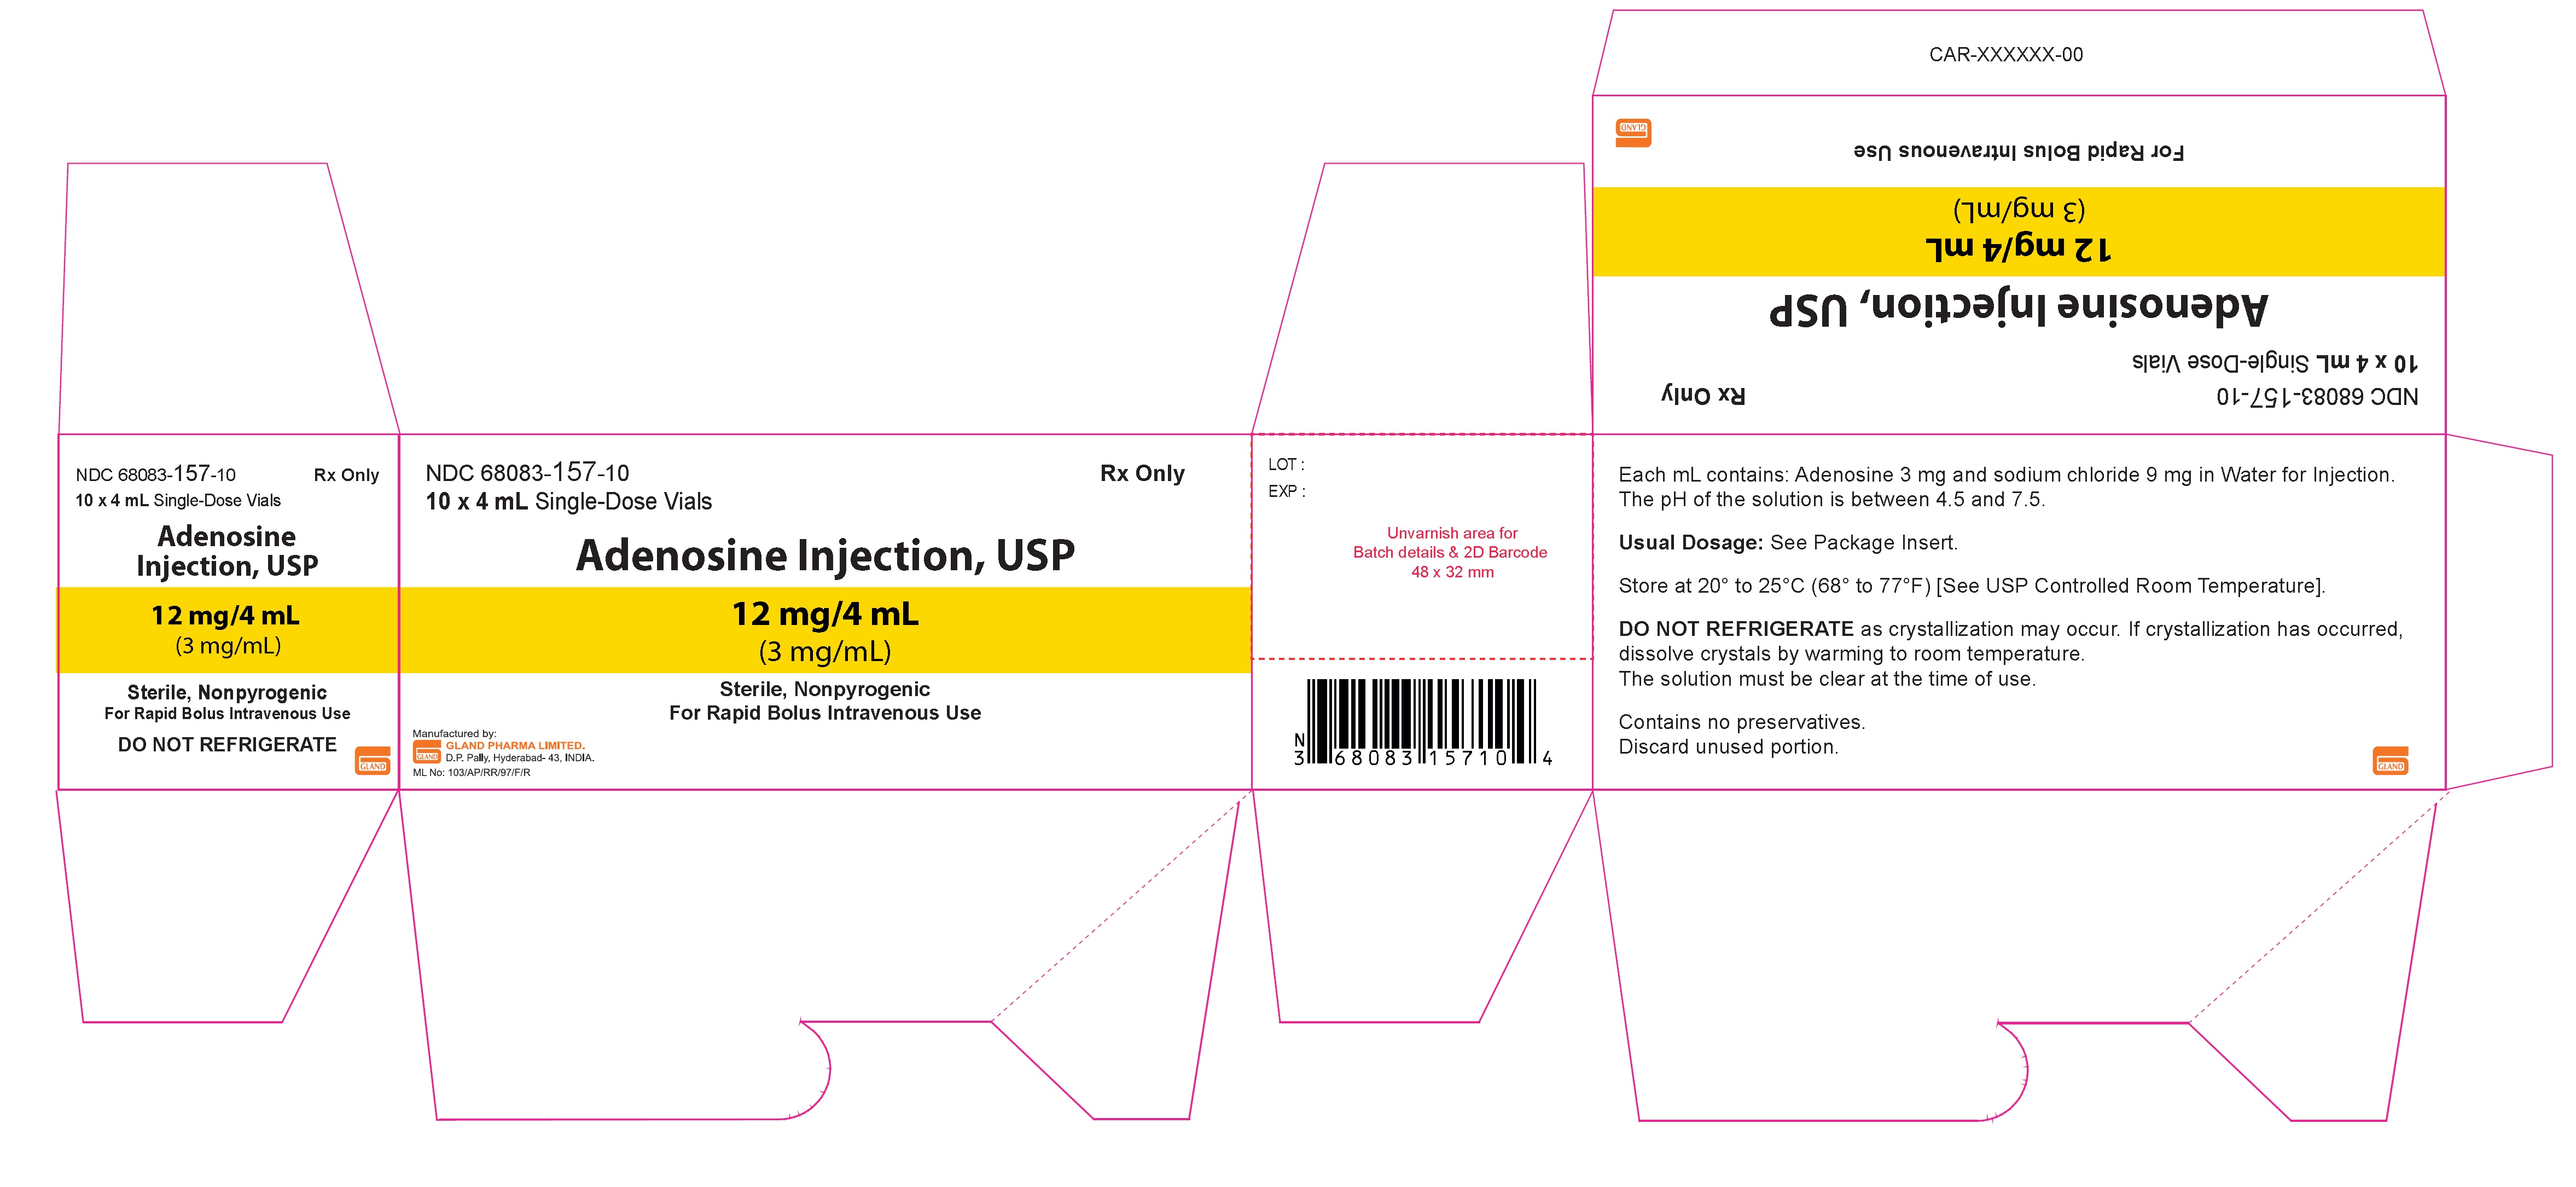 Adenosine-carton-label-12mg